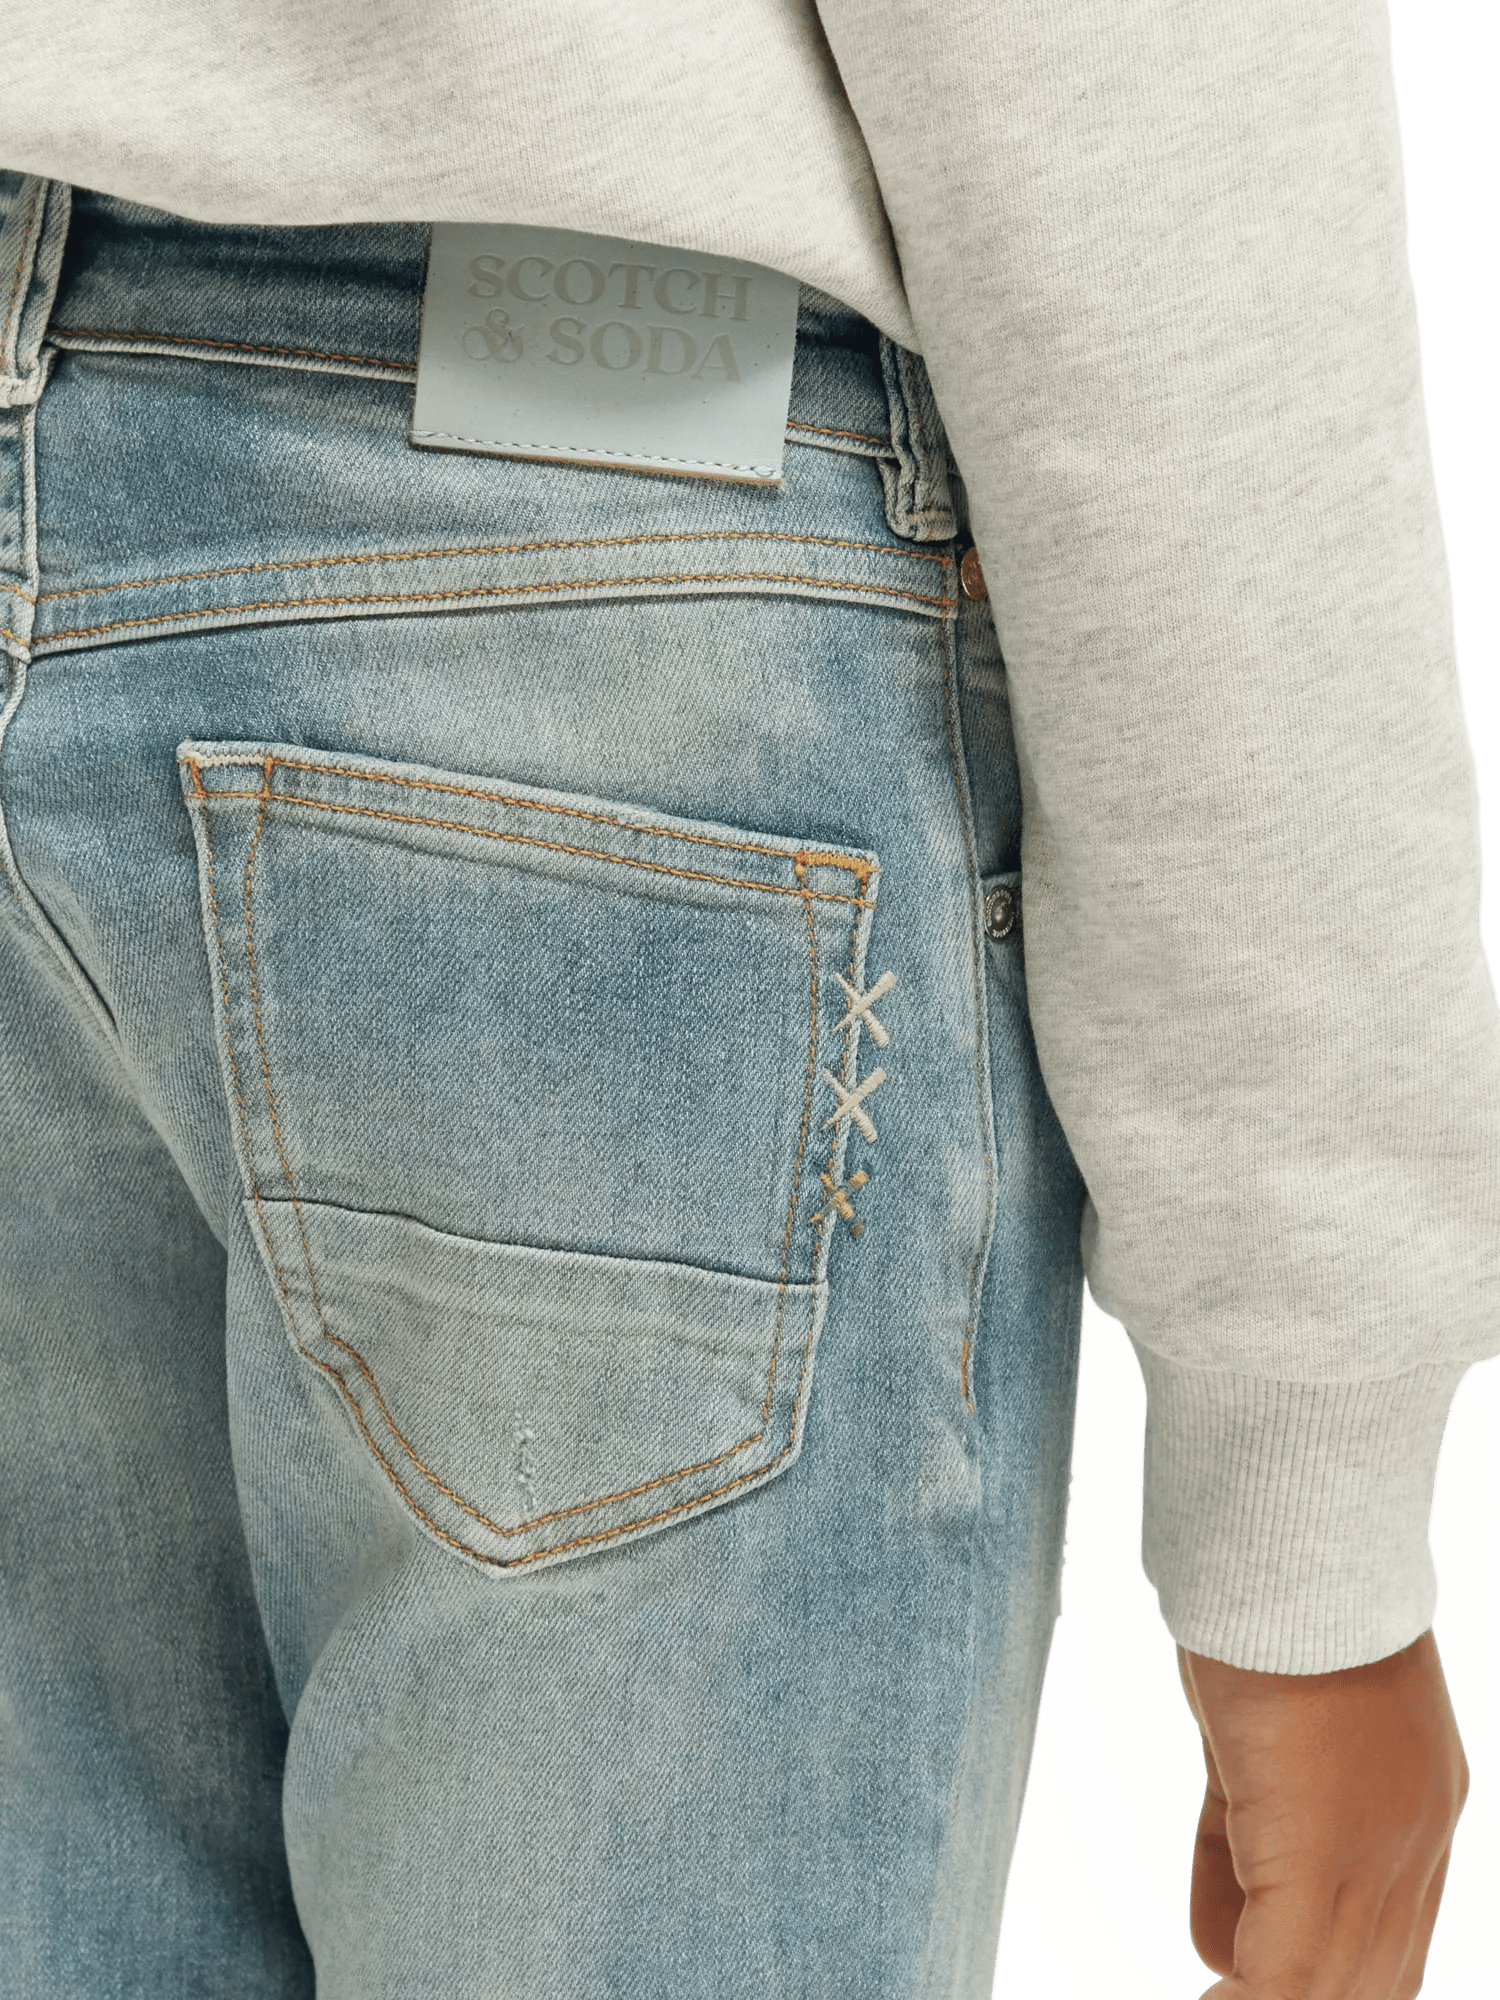 Scotch & Soda The Singel slim tapered jeans —  Cut the grass NHD-DTL1